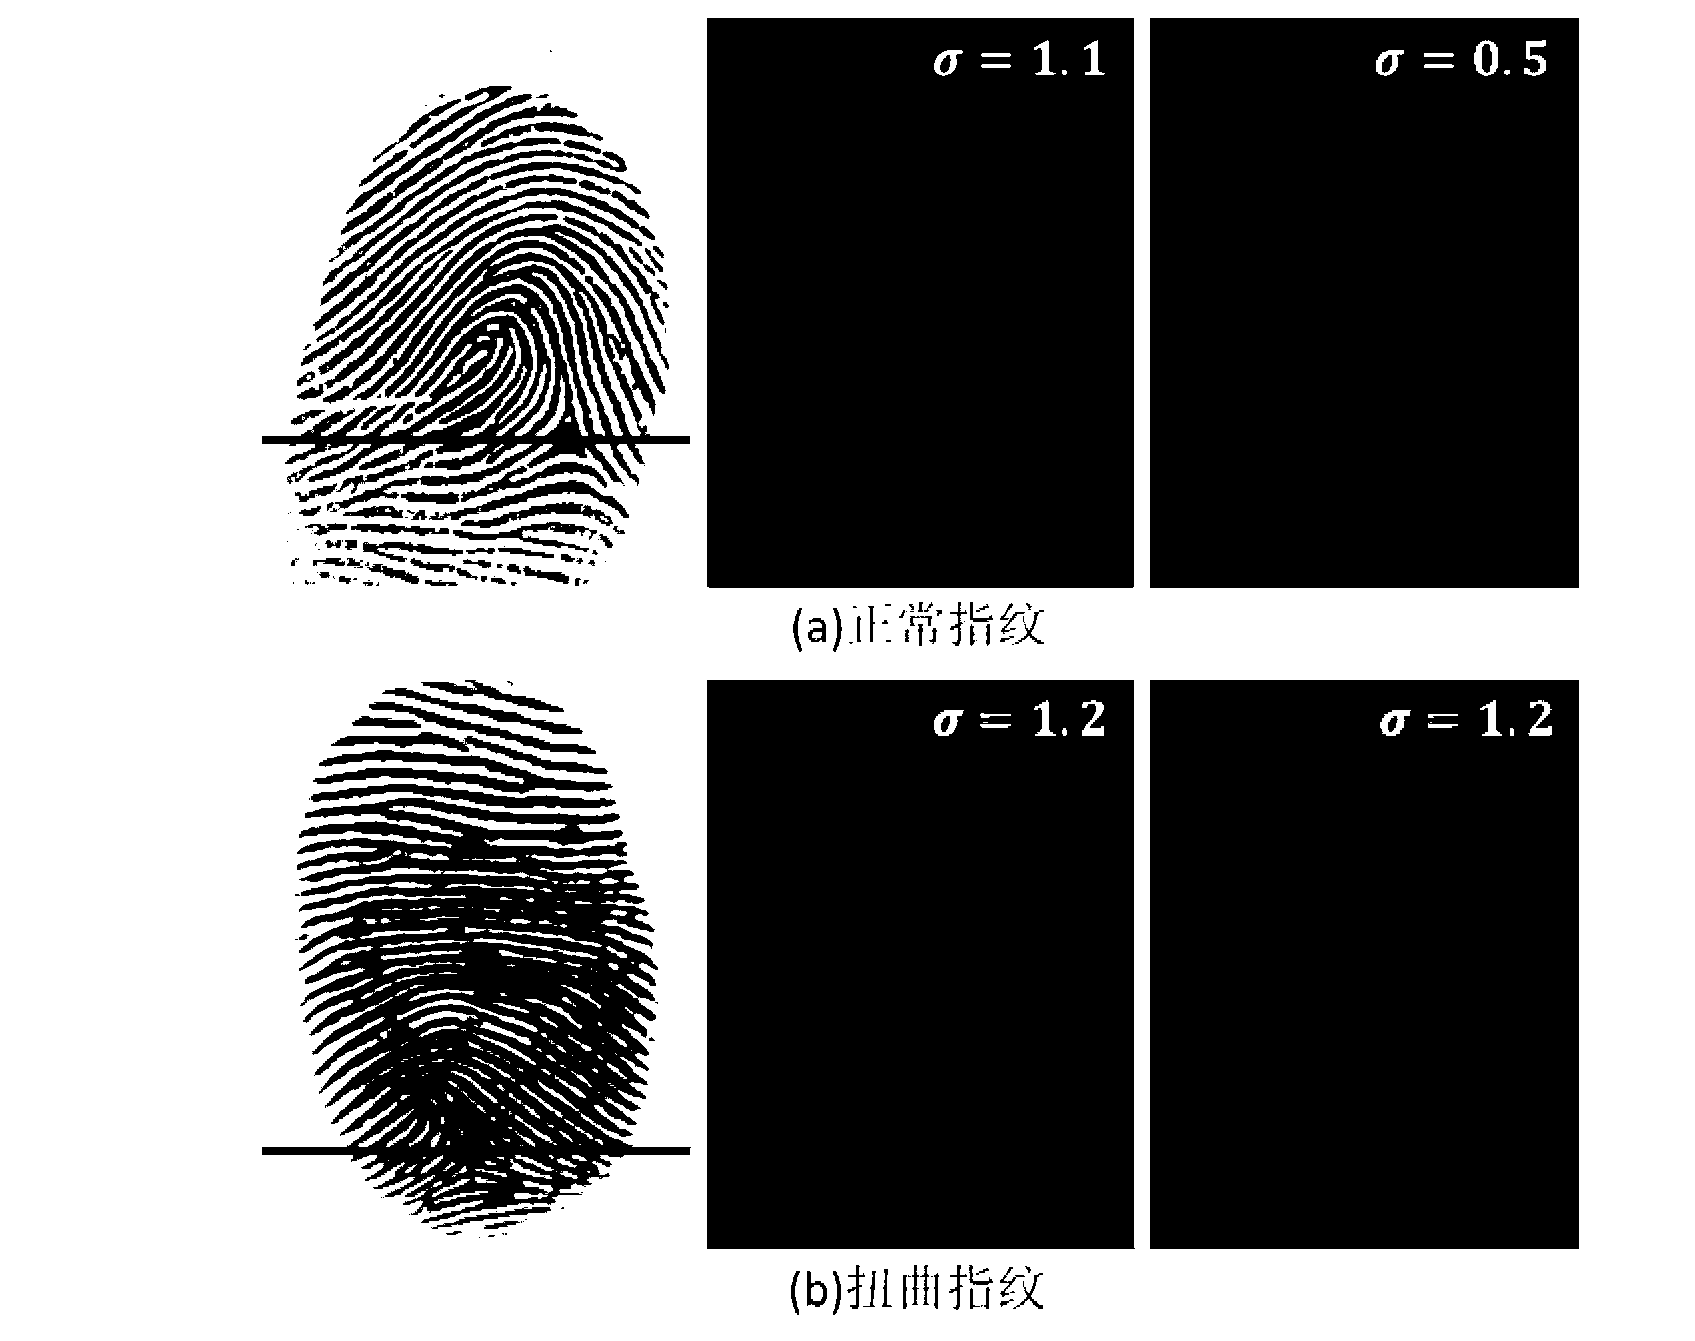 Automatic distorted fingerprint detecting method